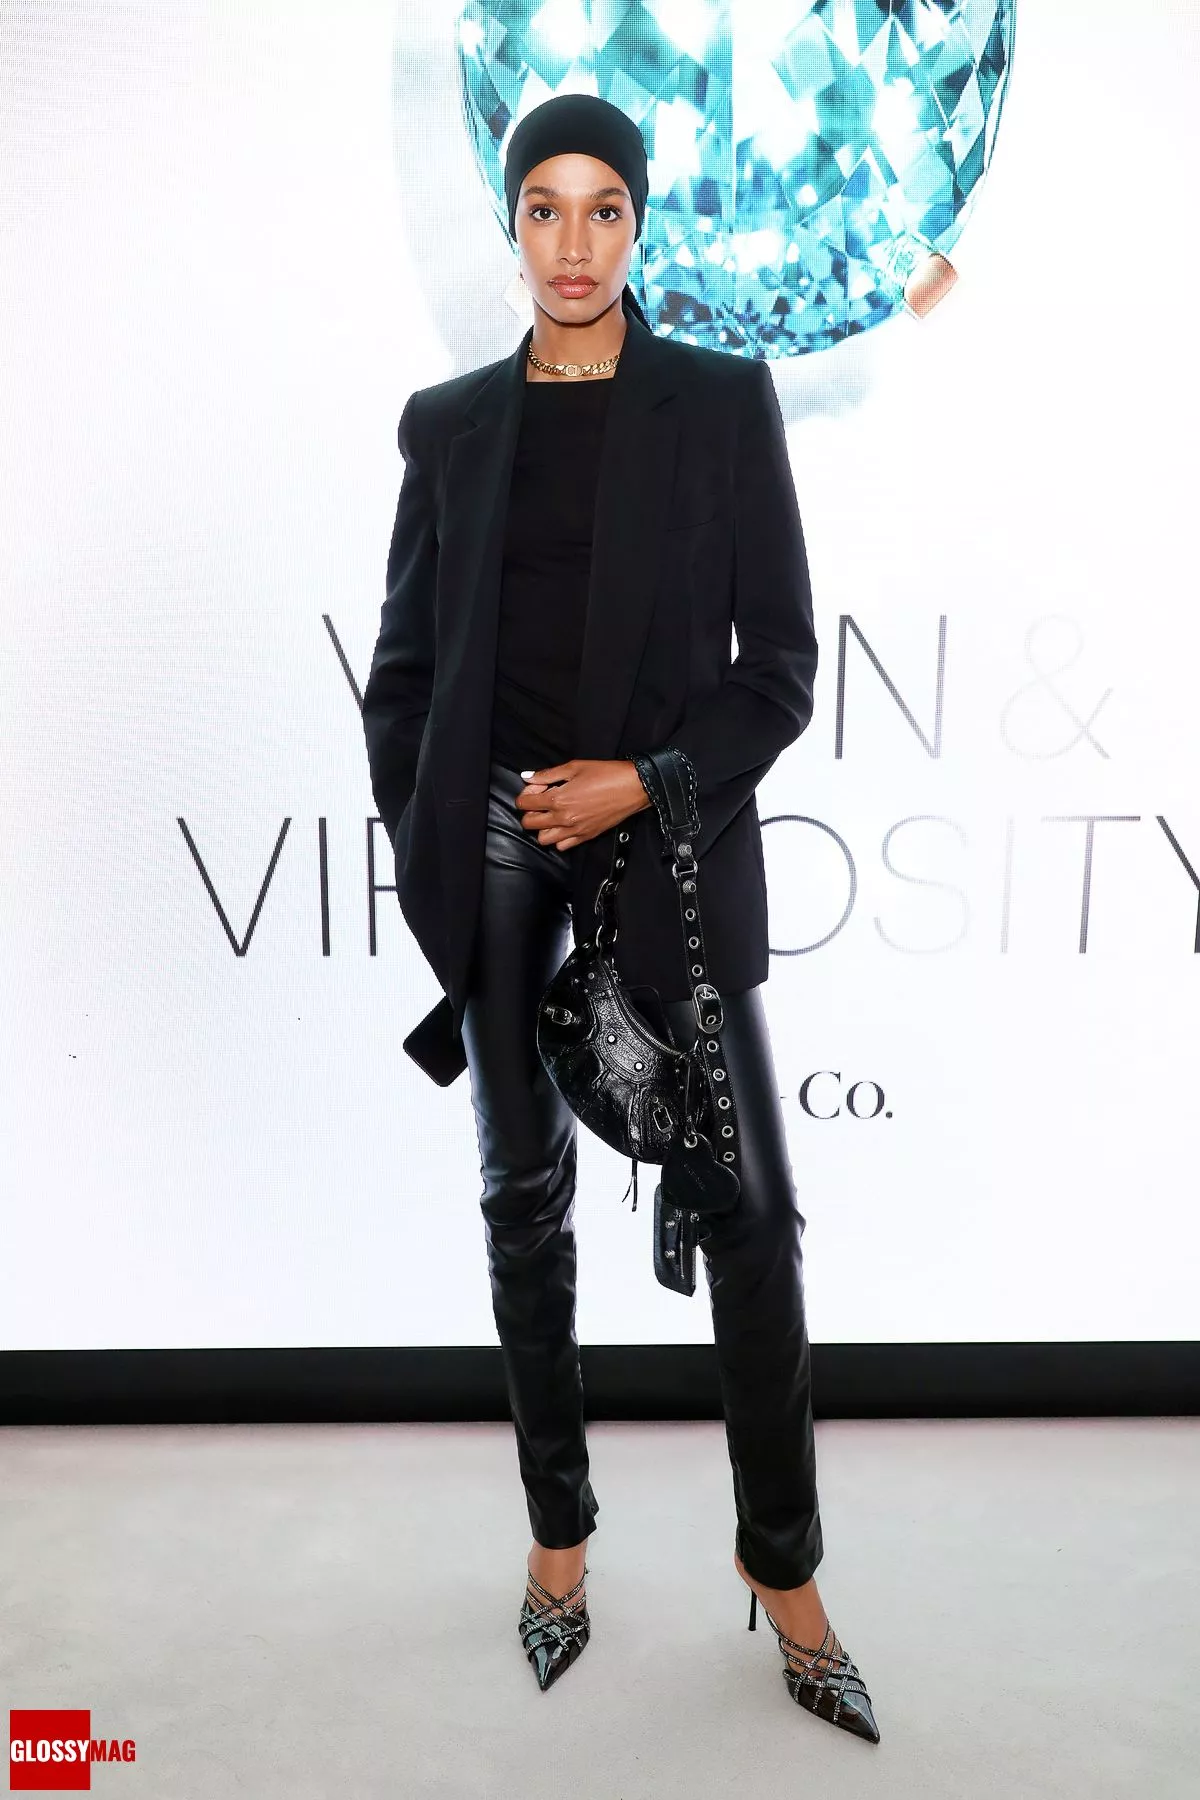 Икрам Абди Умар на открытии выставки Tiffany & Co. «Видение и Виртуозность» в галерее Саатчи в Лондоне, 9 июня 2022 г., фото 1